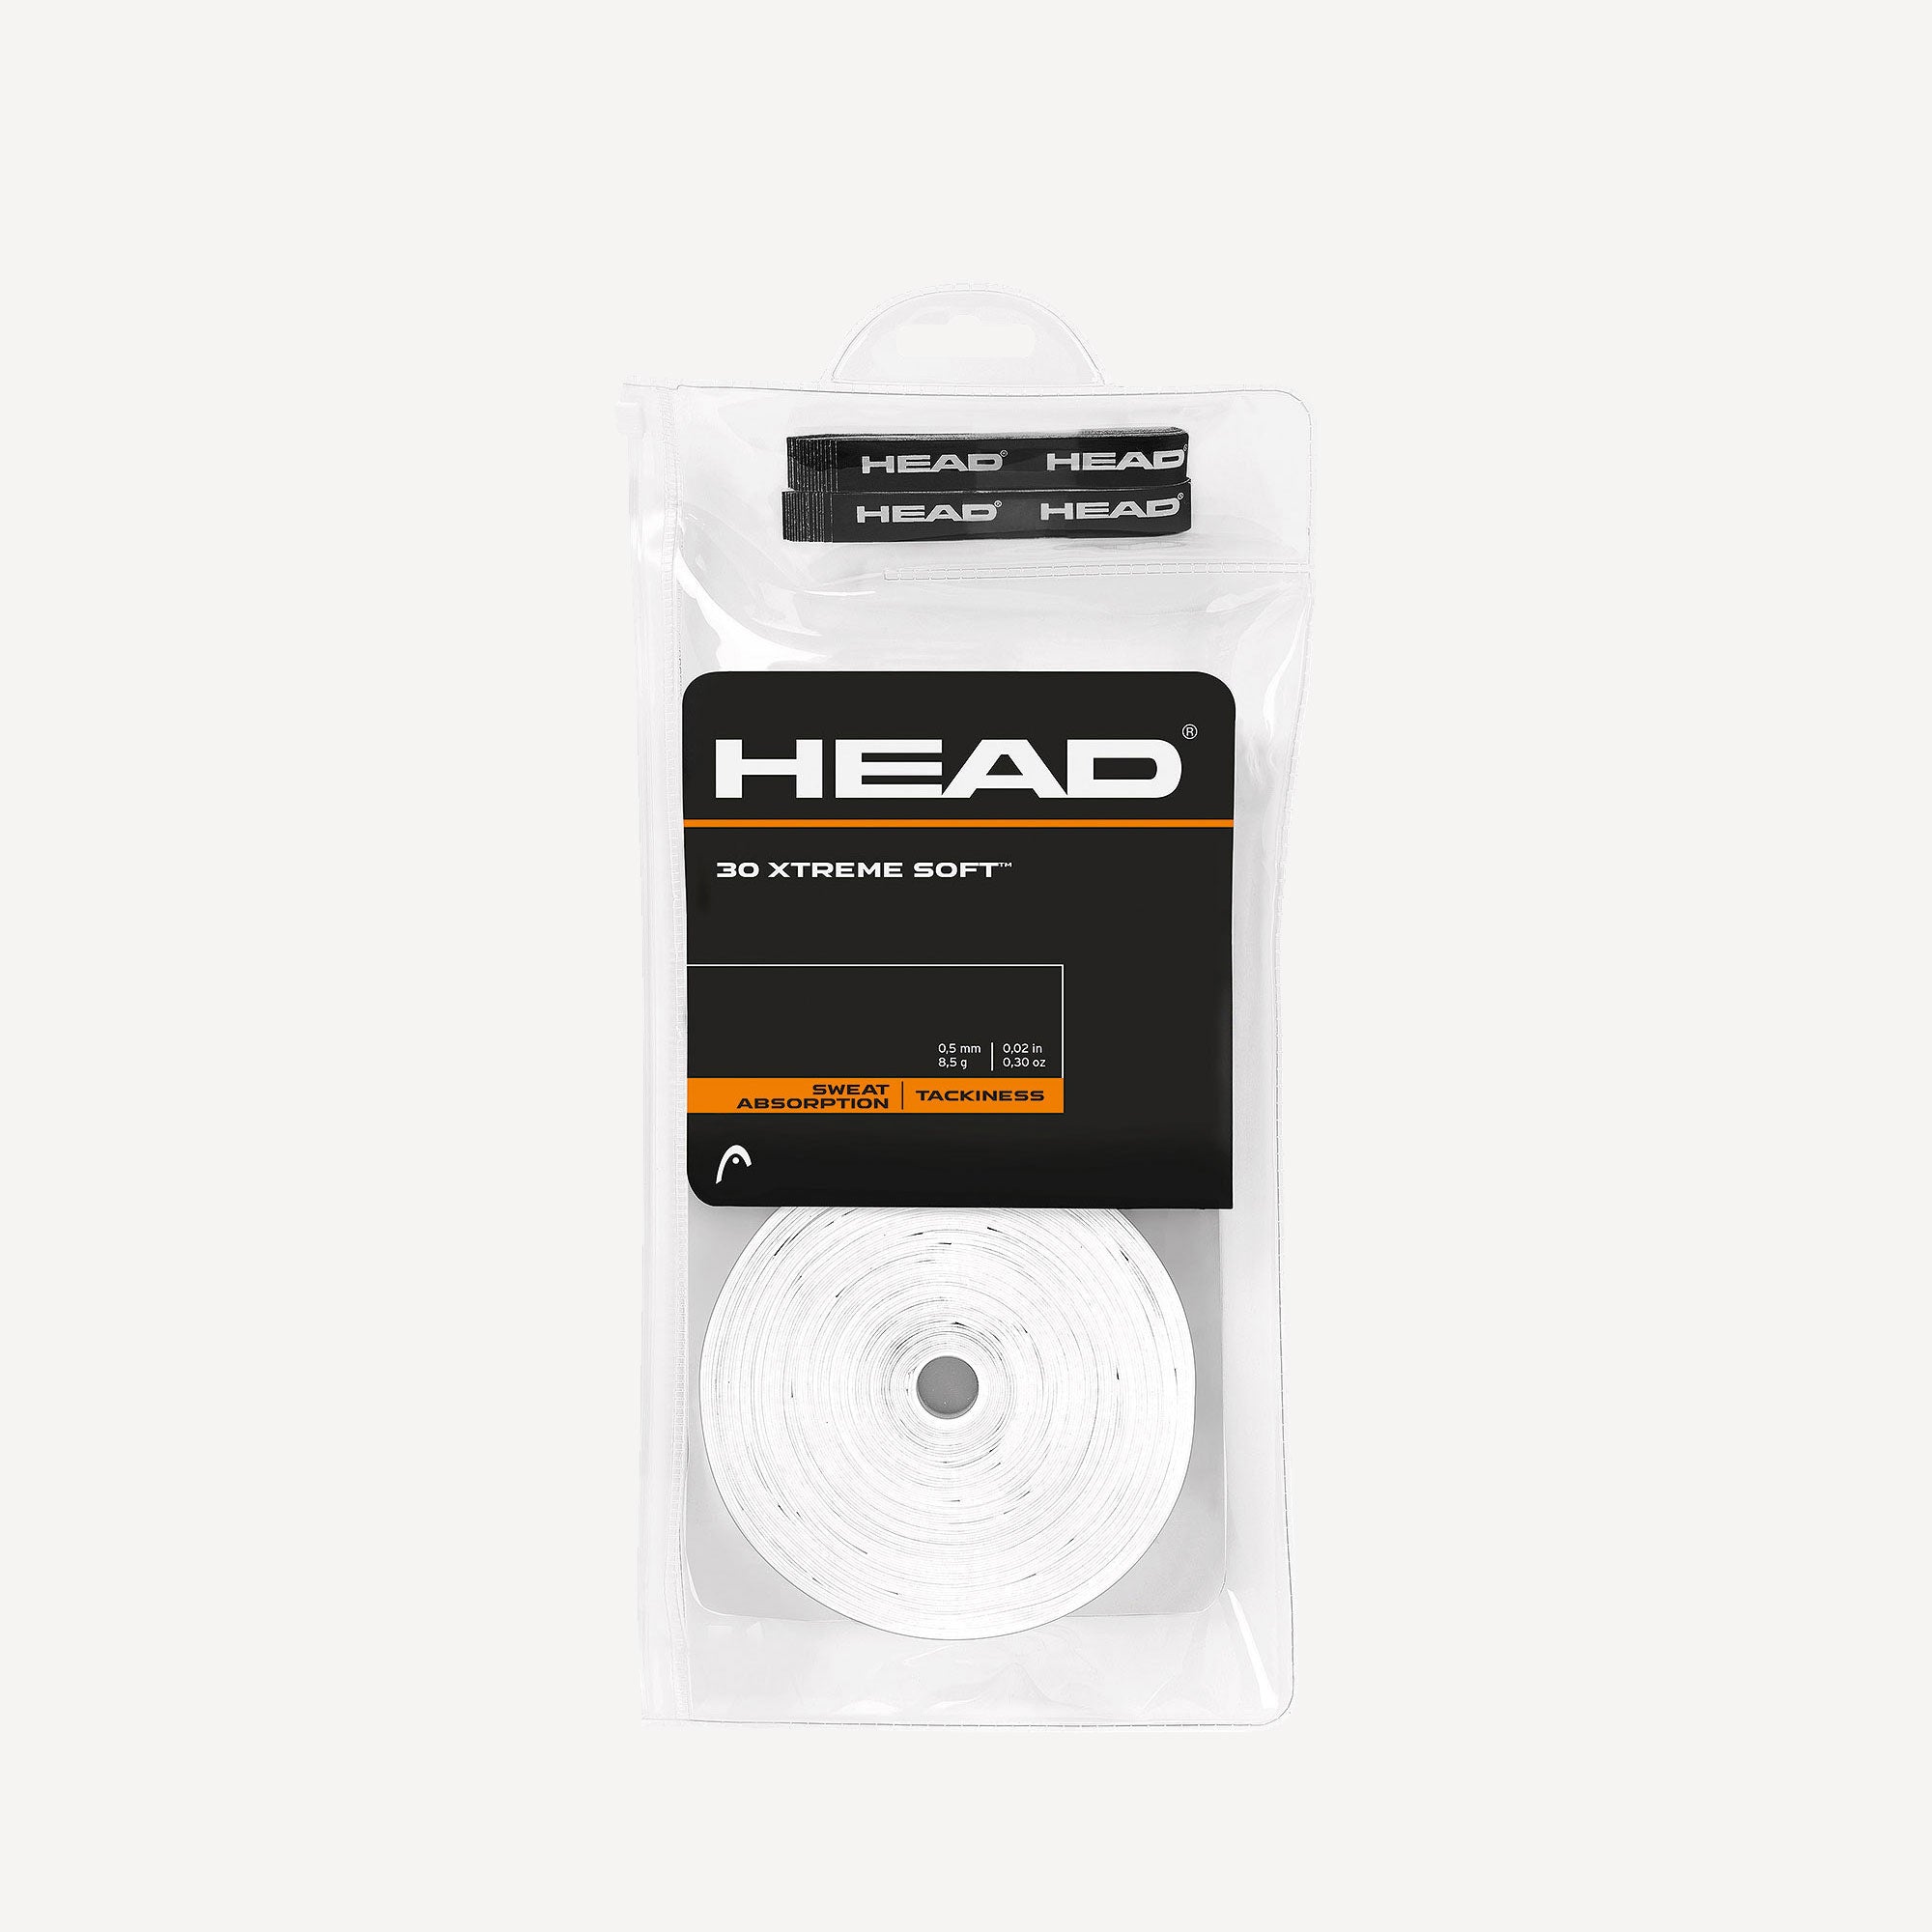 HEAD Xtreme Soft 30 Tennis Overgrip 1